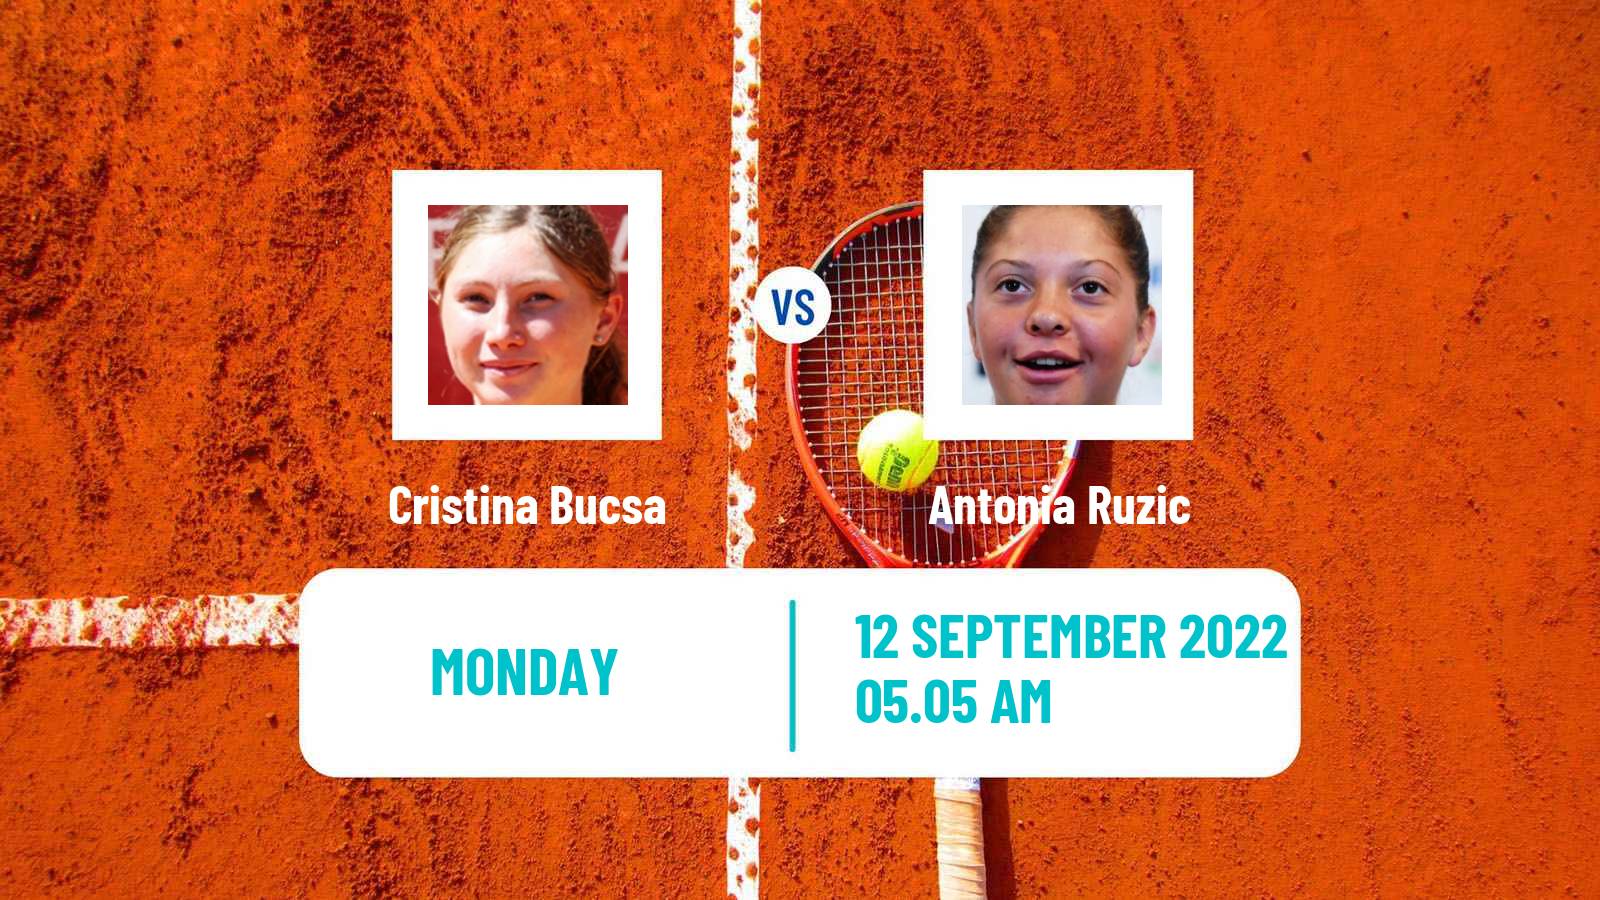 Tennis WTA Portoroz Cristina Bucsa - Antonia Ruzic